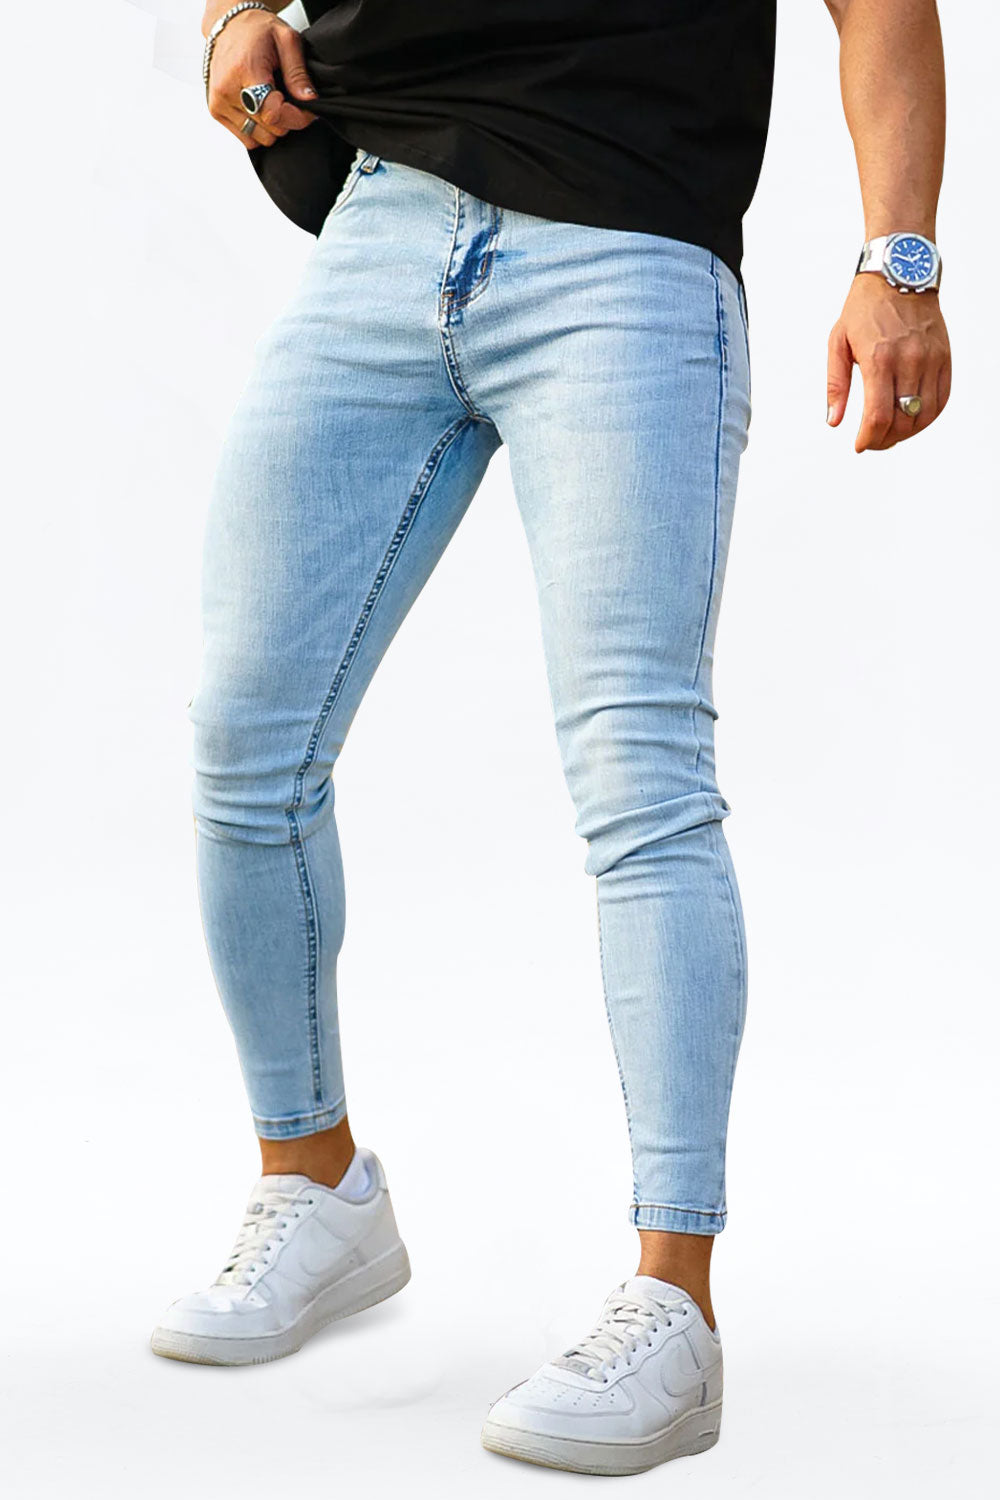 GINGTTO Mens Black Stylish Skinny Jeans|Jeans New|Mens Skinny Jeans|Skinny Jeans Men|Fit Jeans|Mens Jeans Sale 28